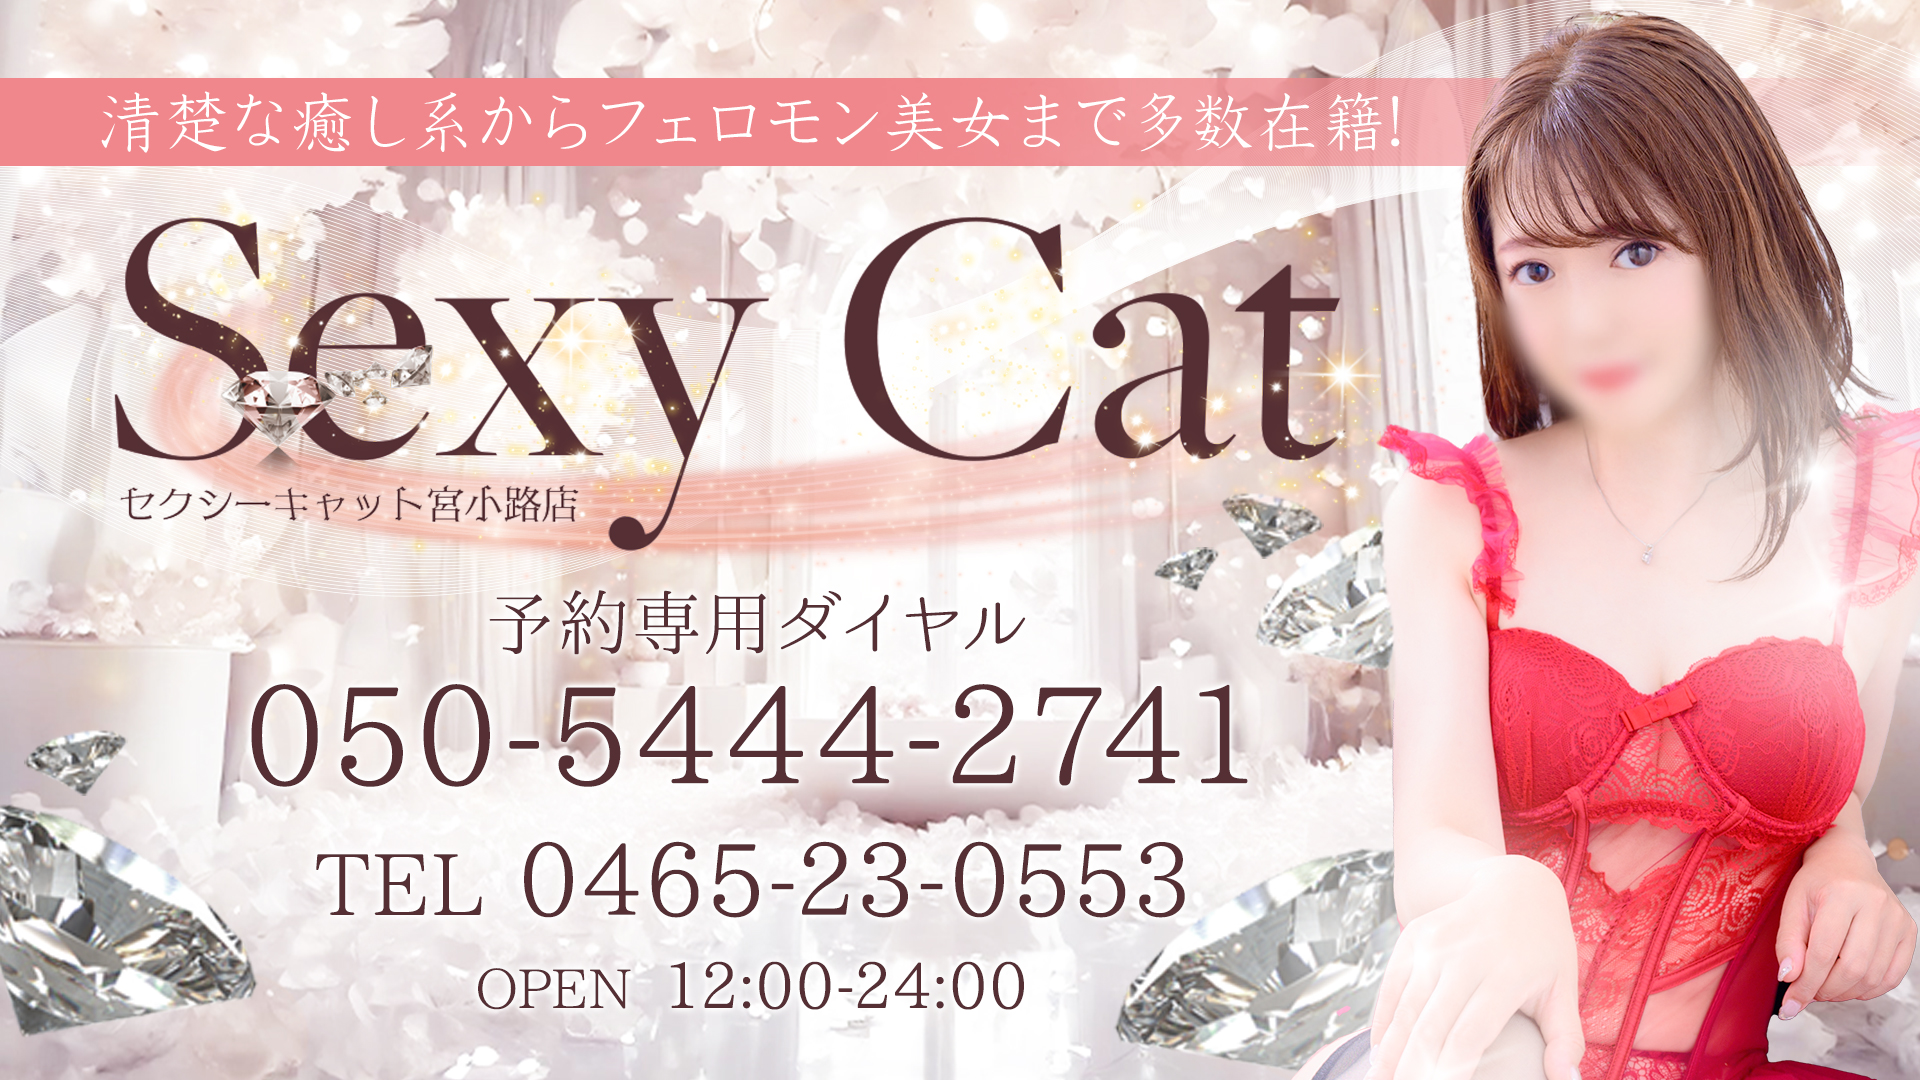 Sexy Cat 宮小路店